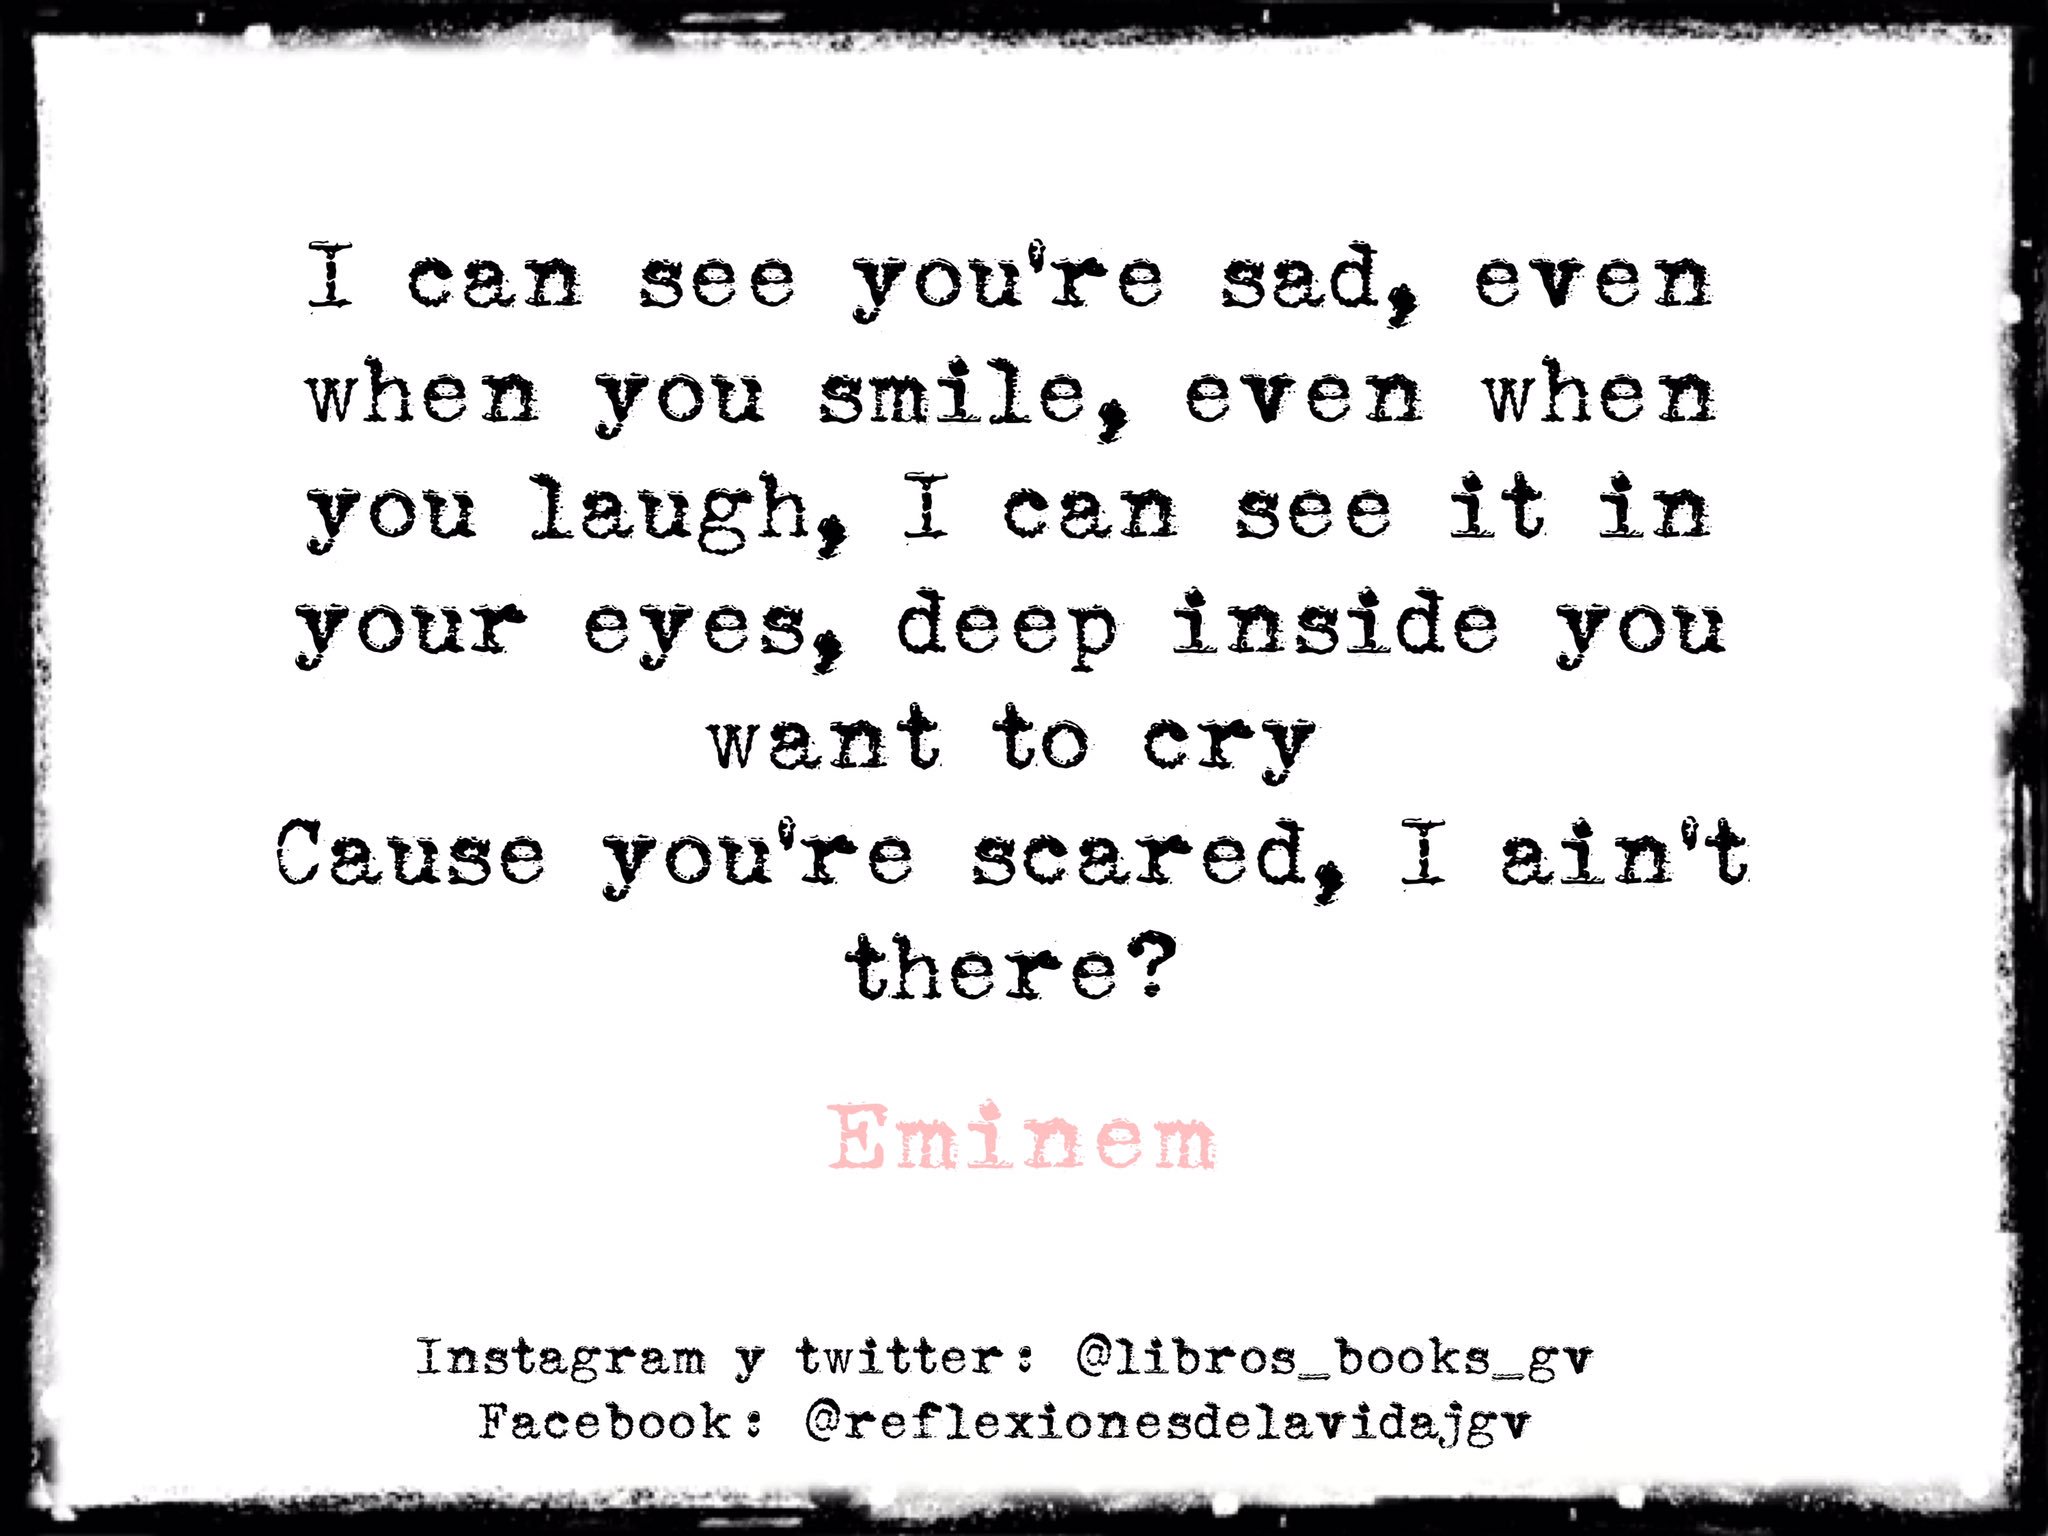 Eminem mockingbird <3  Eminem mockingbird lyrics, Eminem